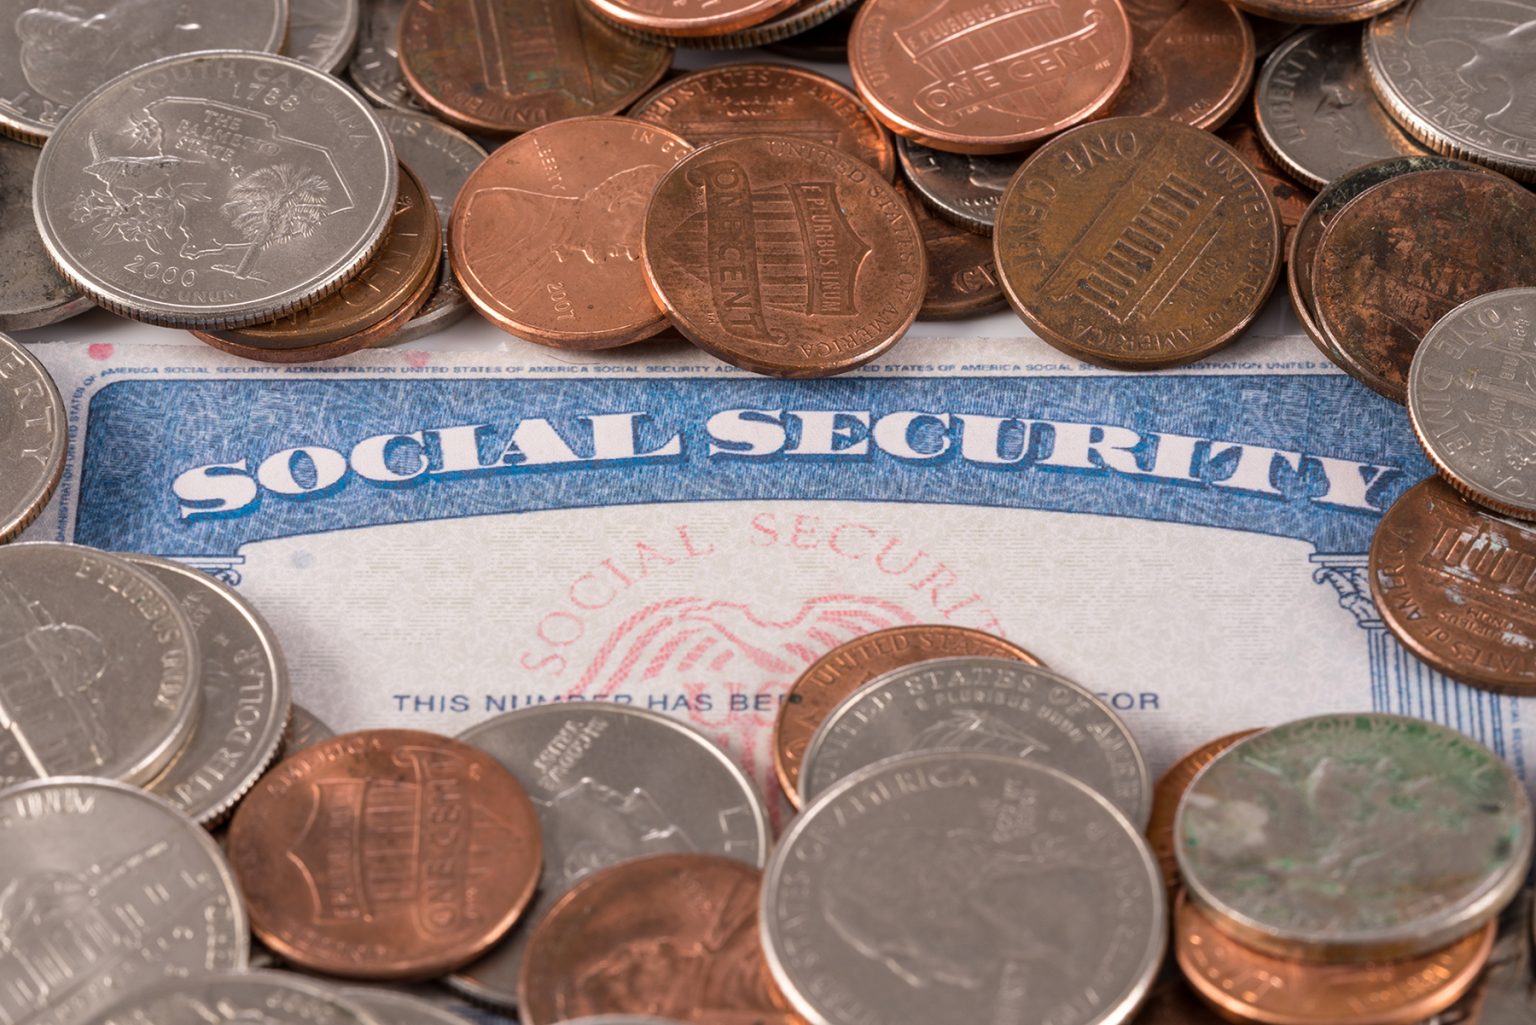 USA social security card with coins